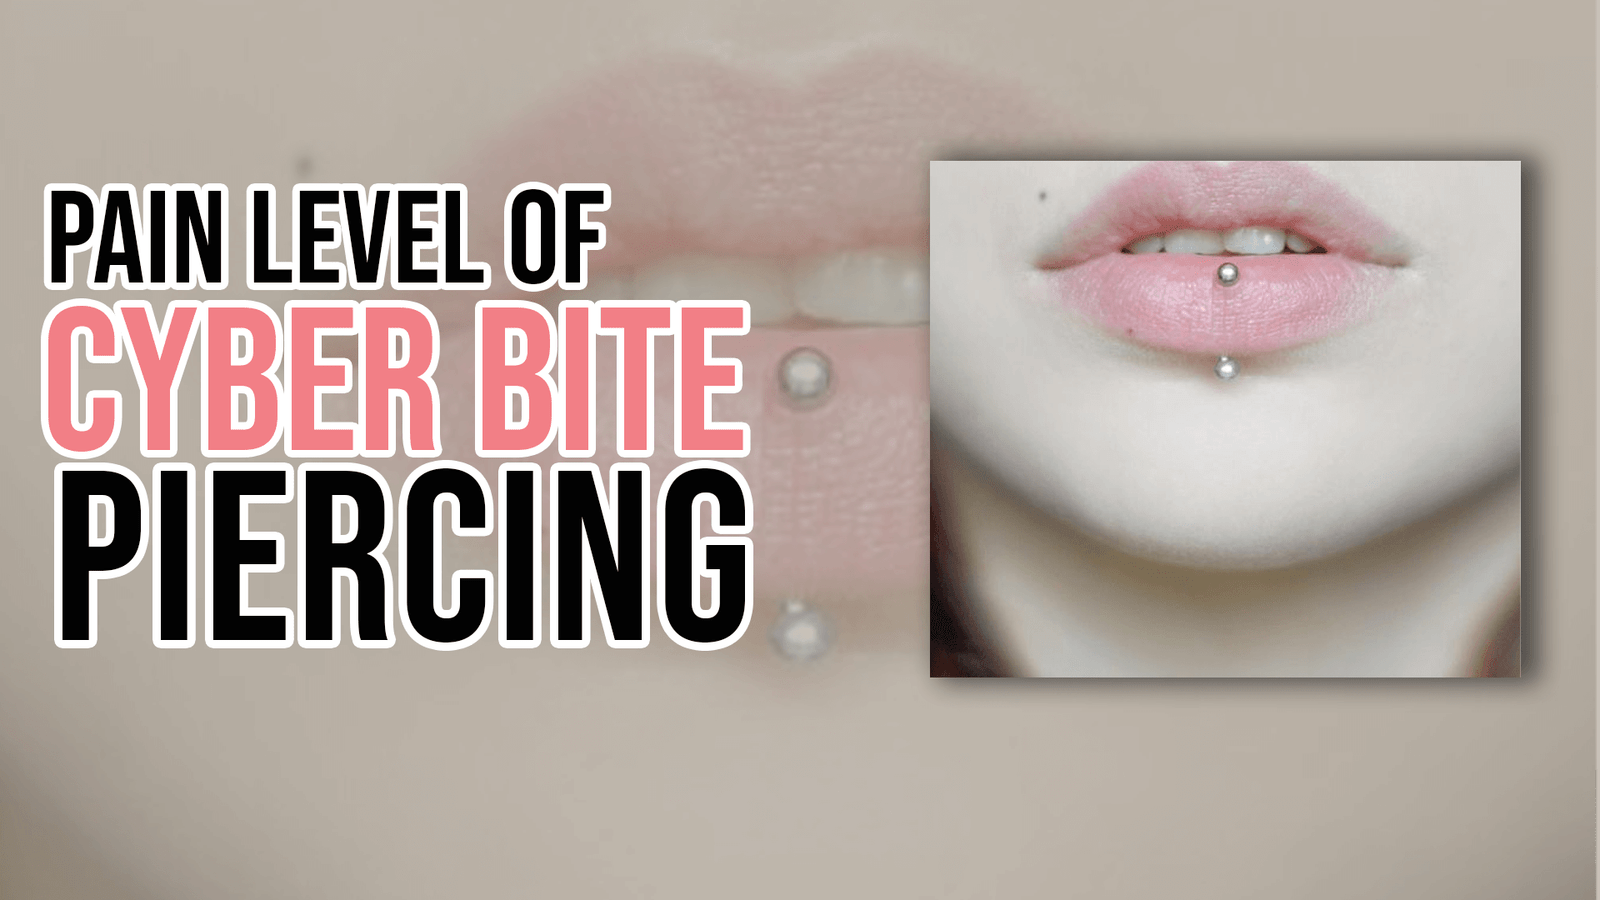 Pain Level of Cyber Bite Piercing